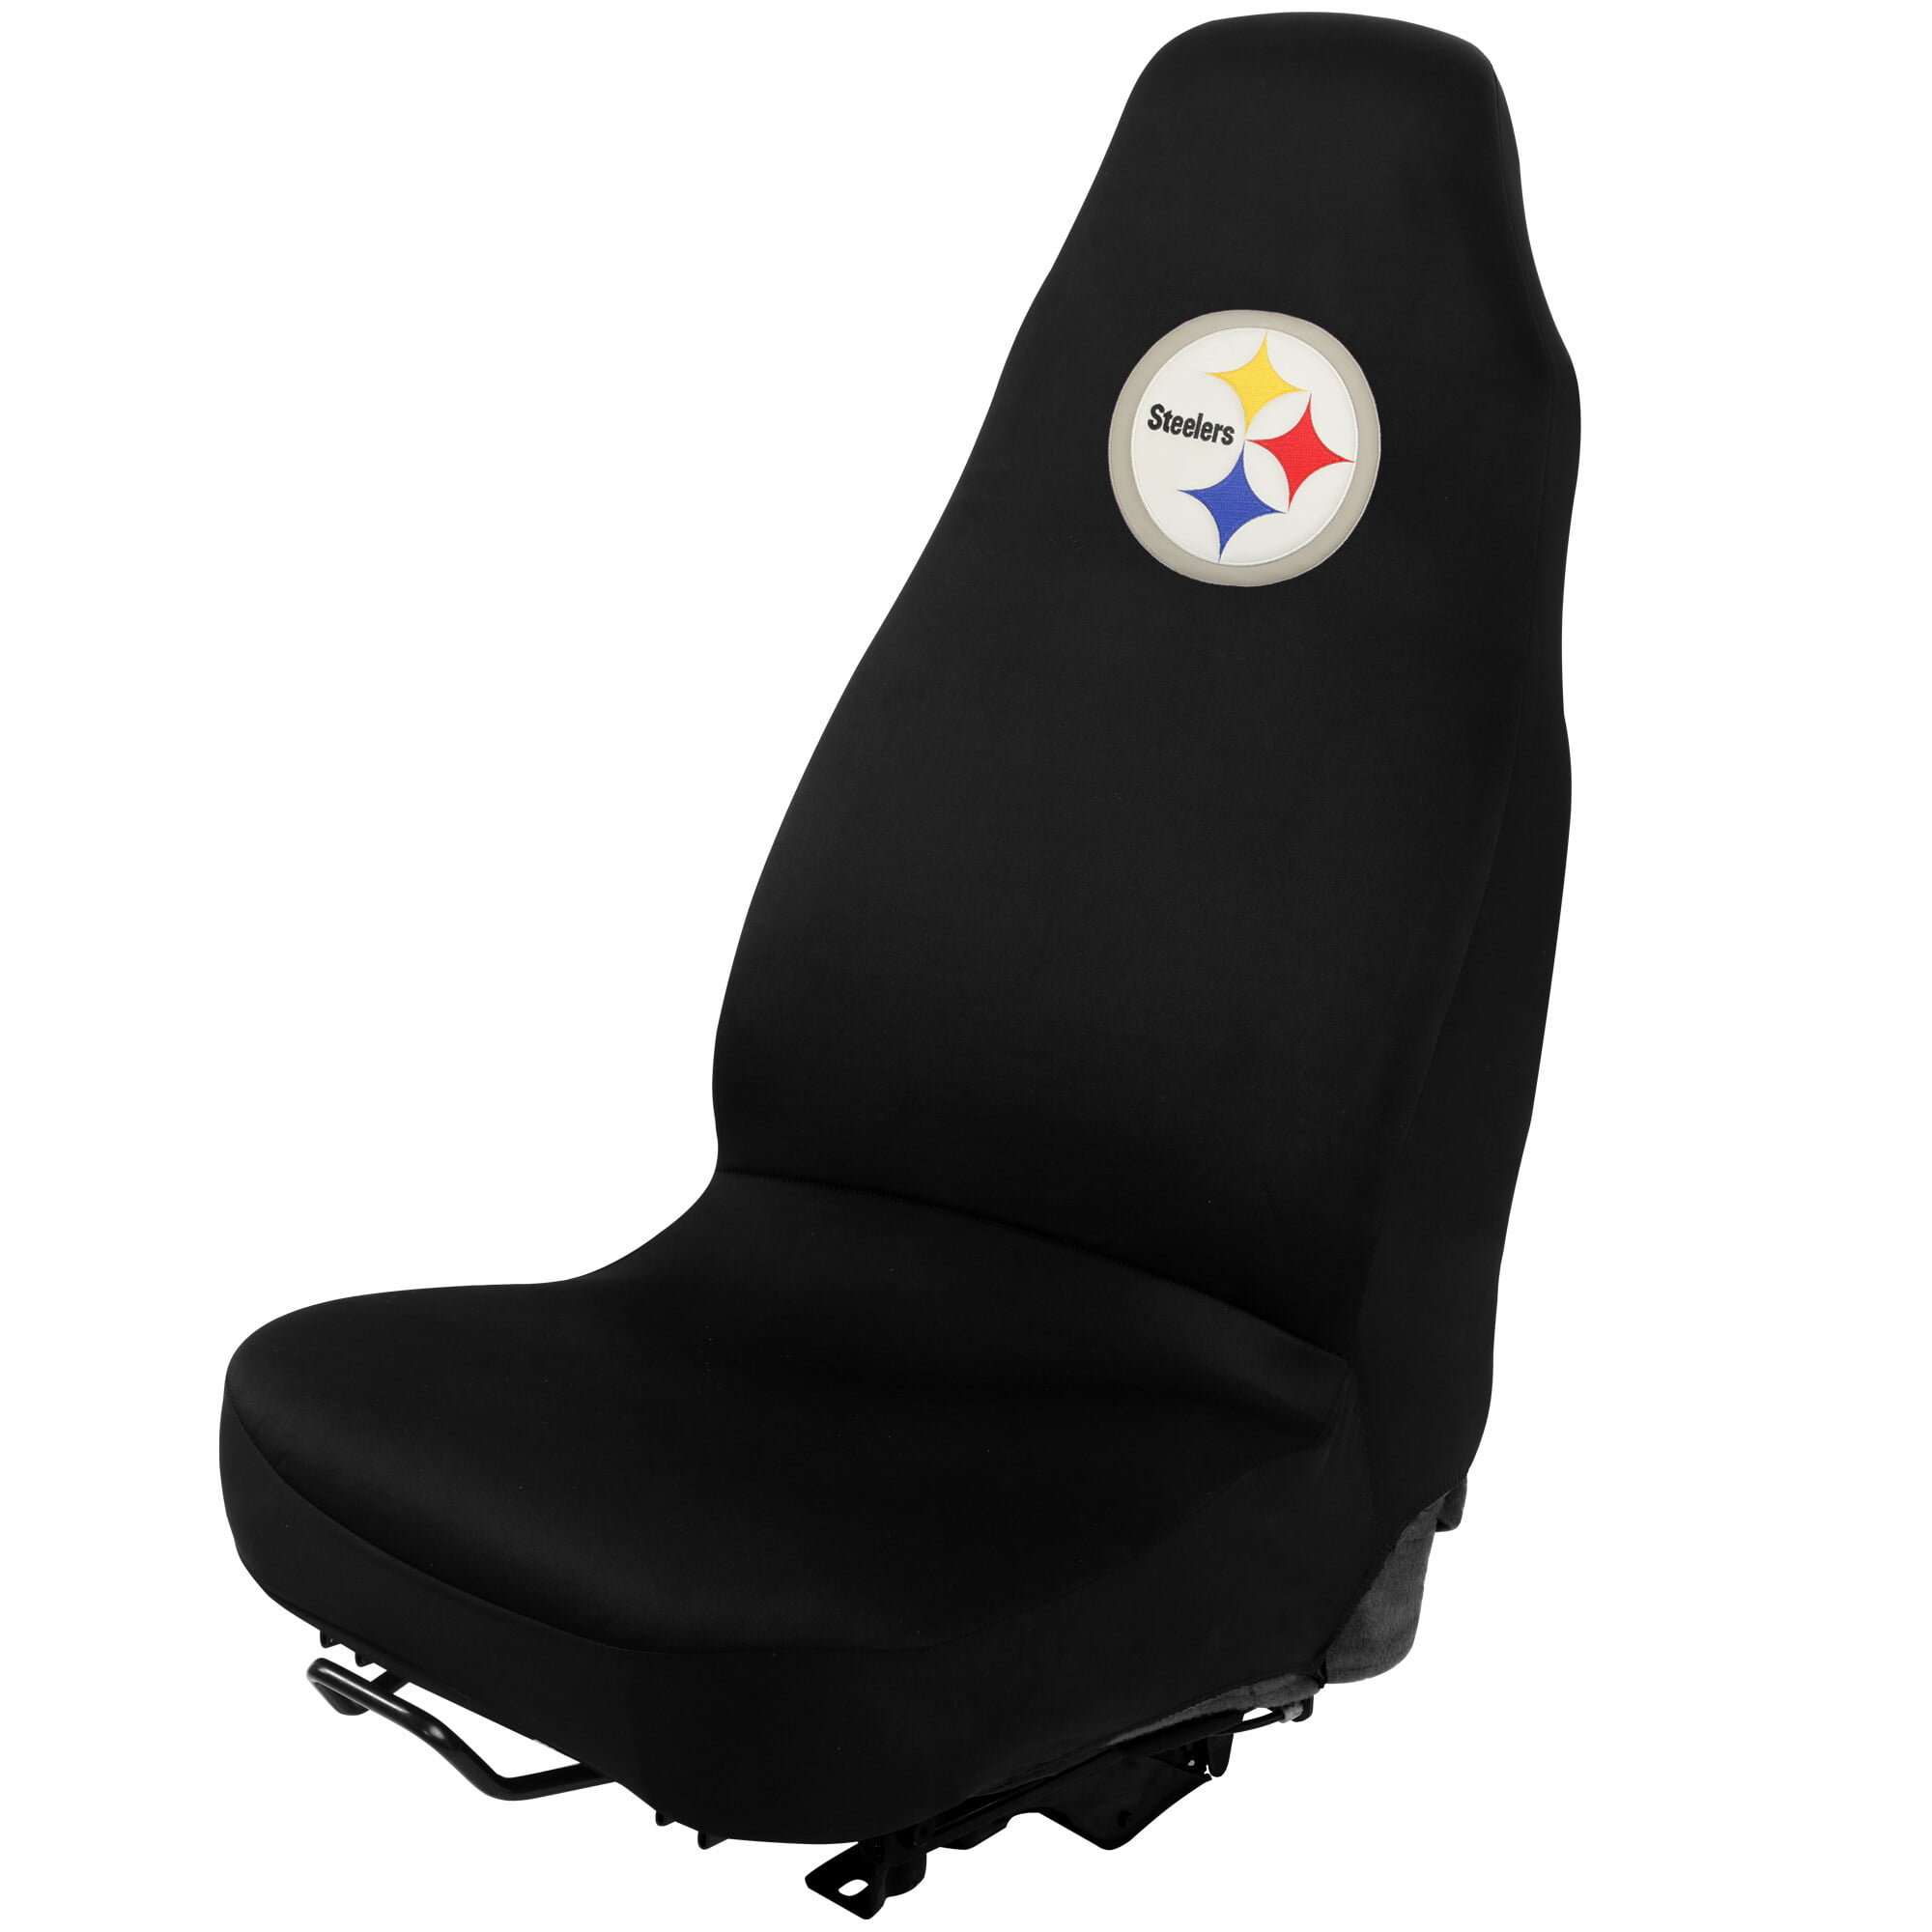 Pittsburgh Steelers Car Seat Cover - Black - Walmart.com - Walmart.com